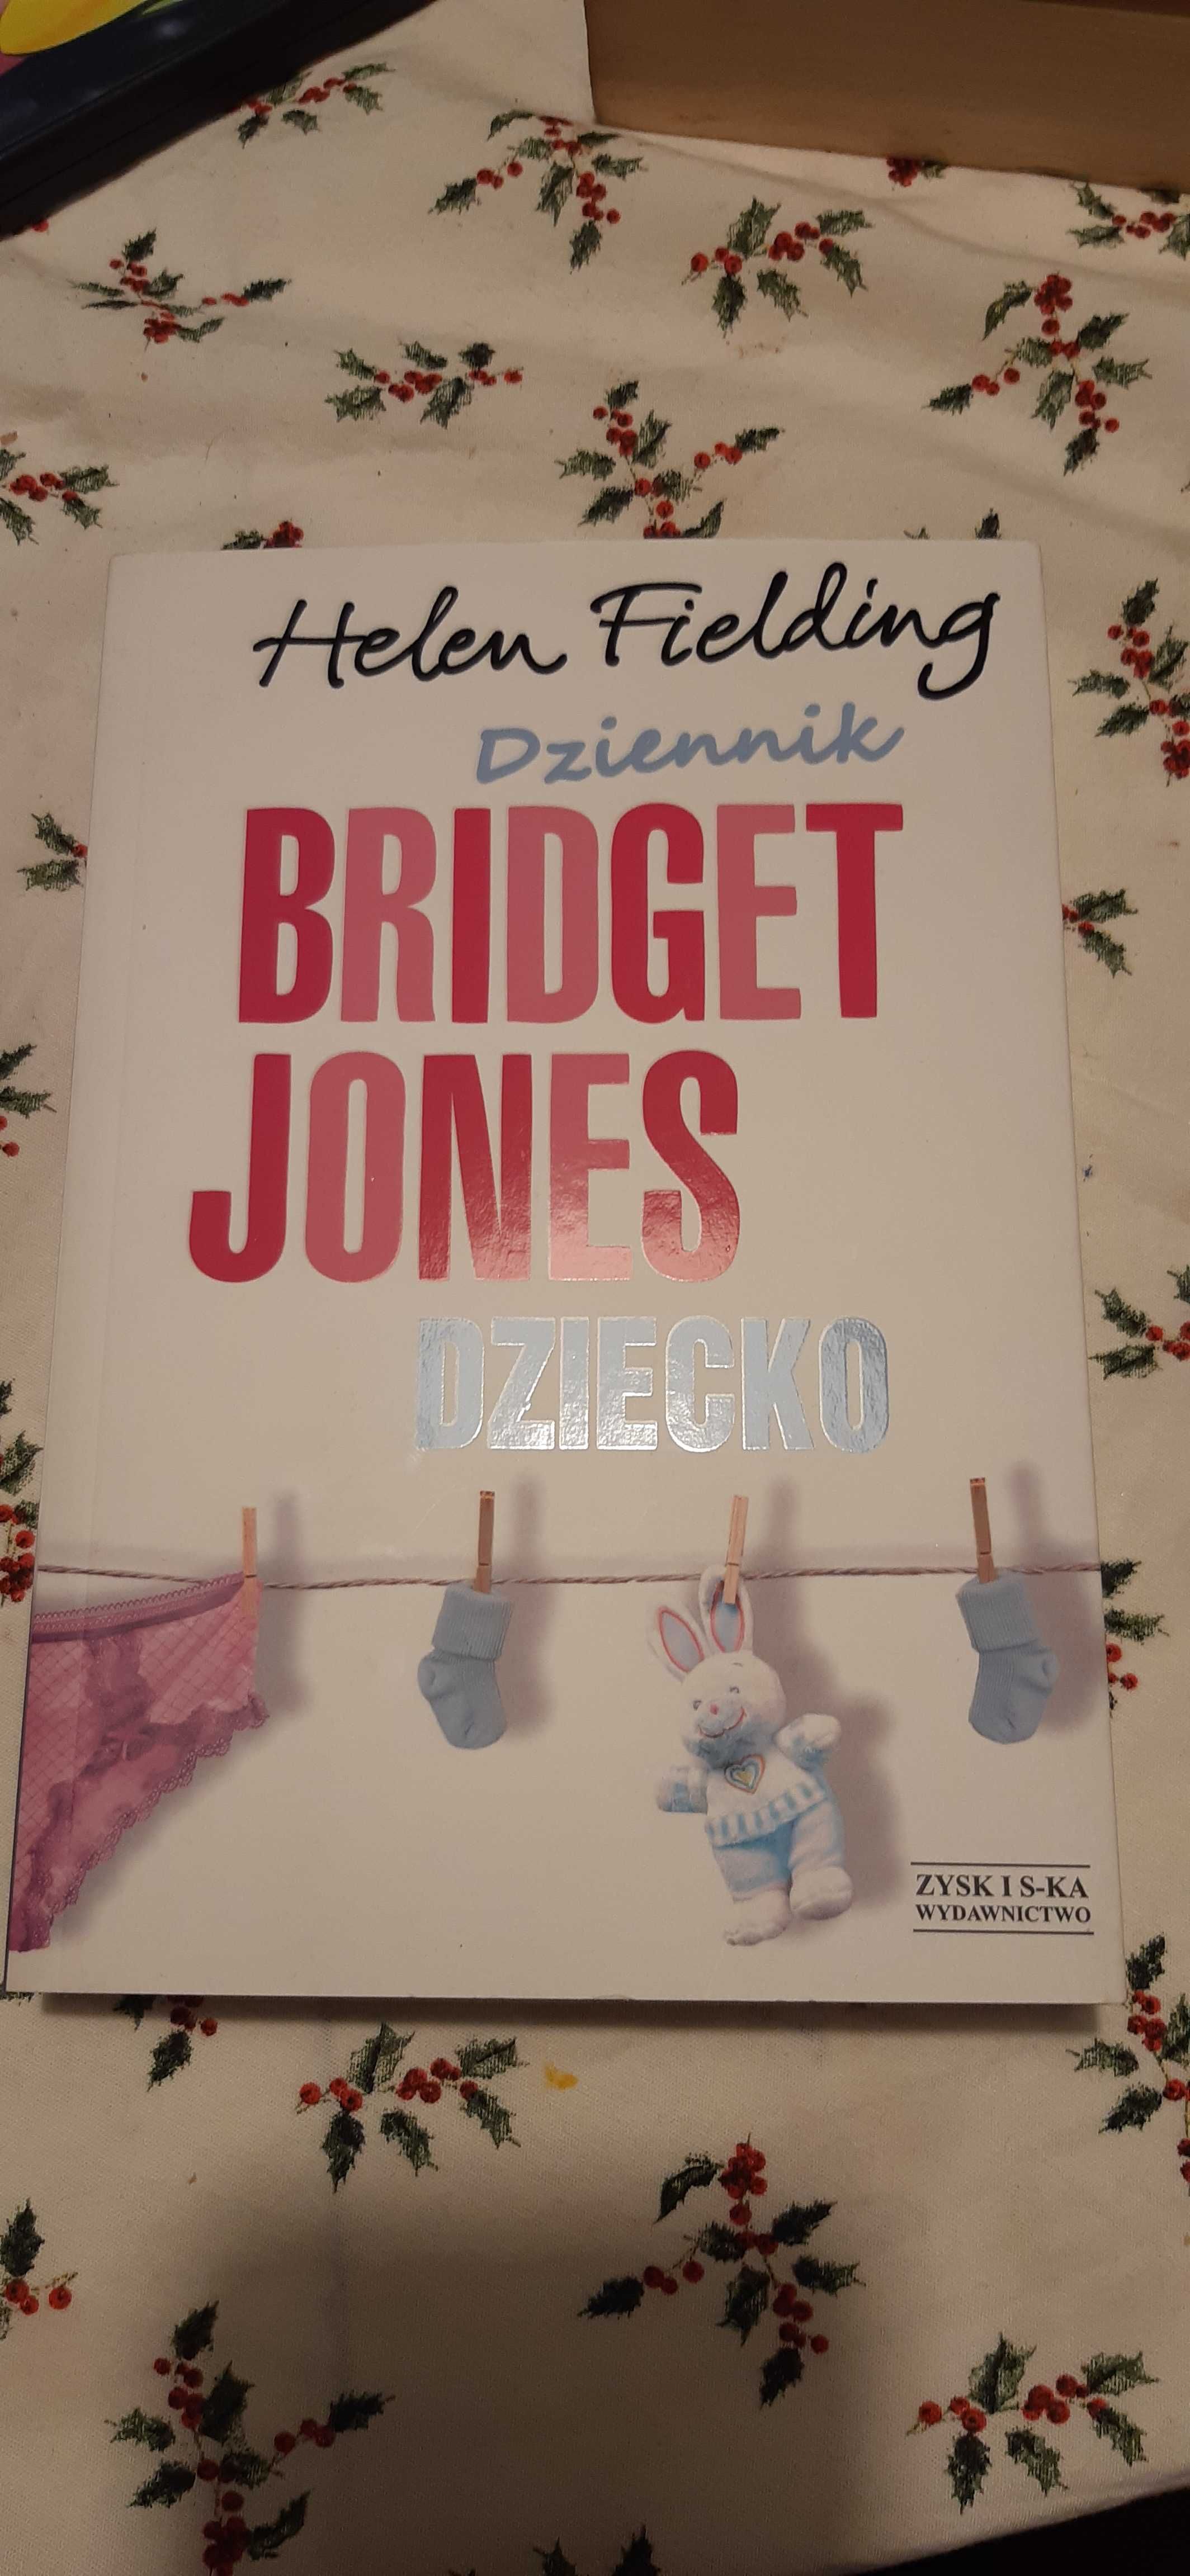 Dziennik Bridget Jones dziecko Helen Fielding